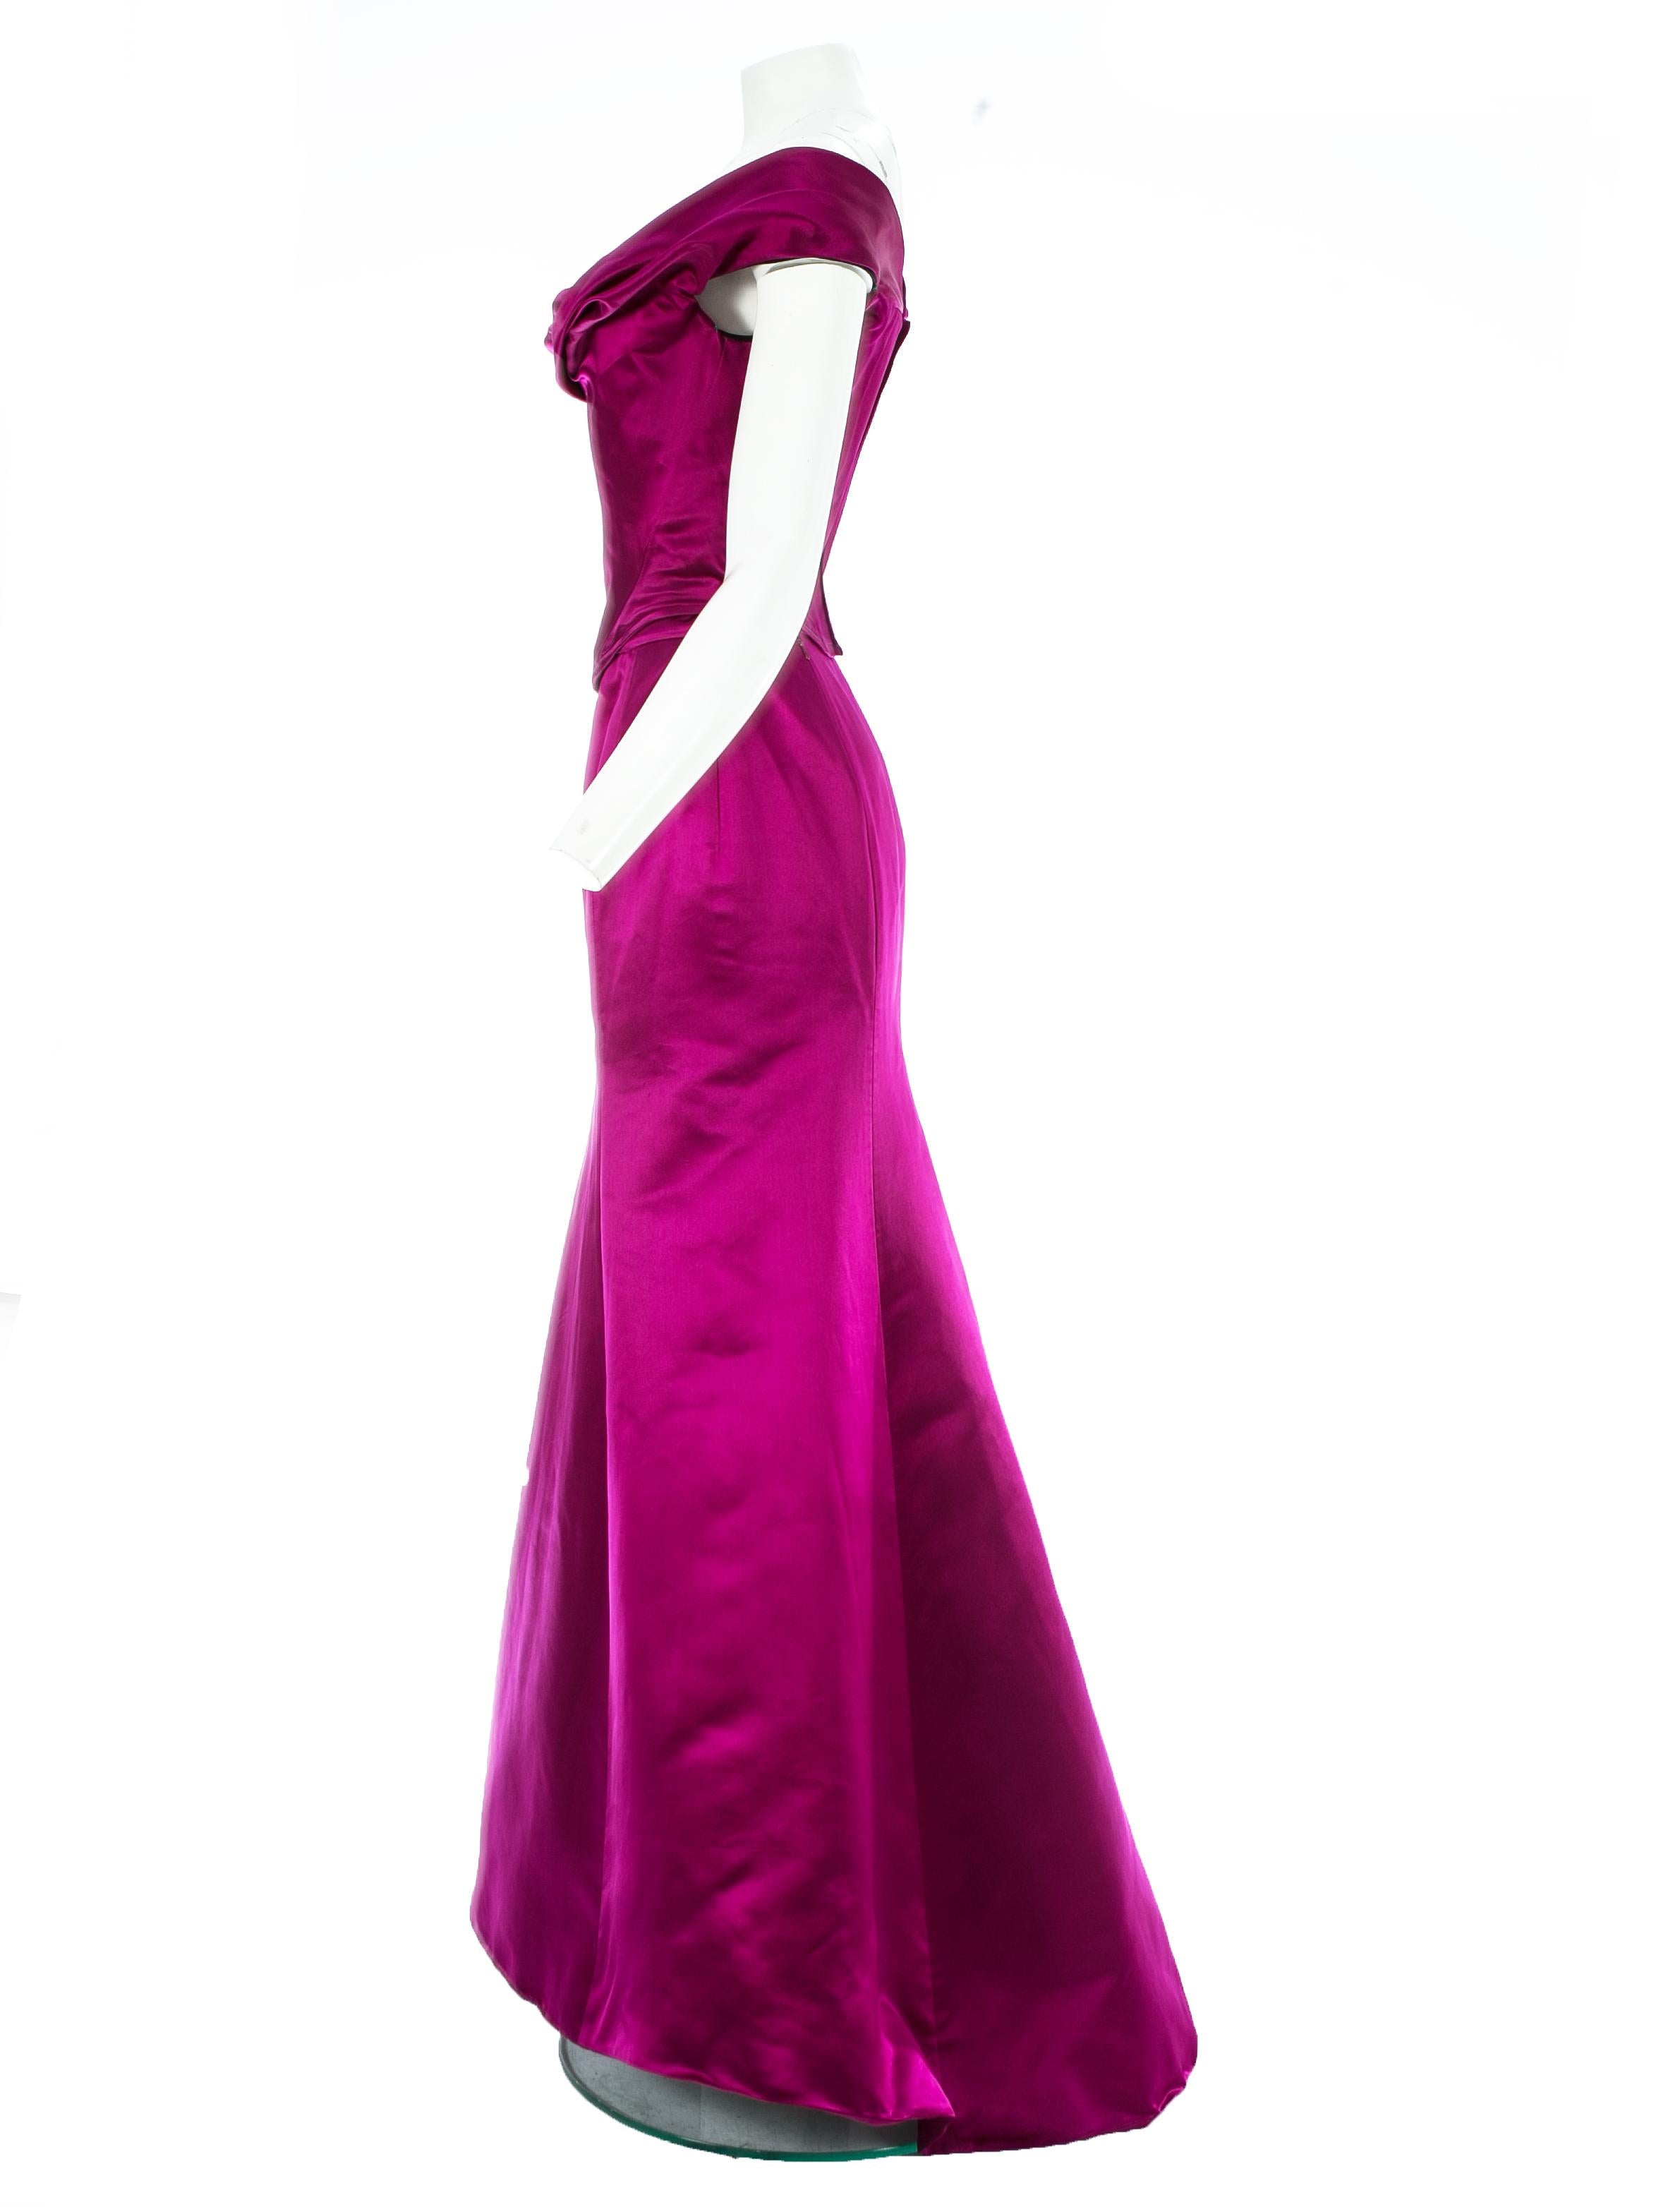 Purple Vivivenne Westwood magenta satin corset and fishtail skirt, c. 1999